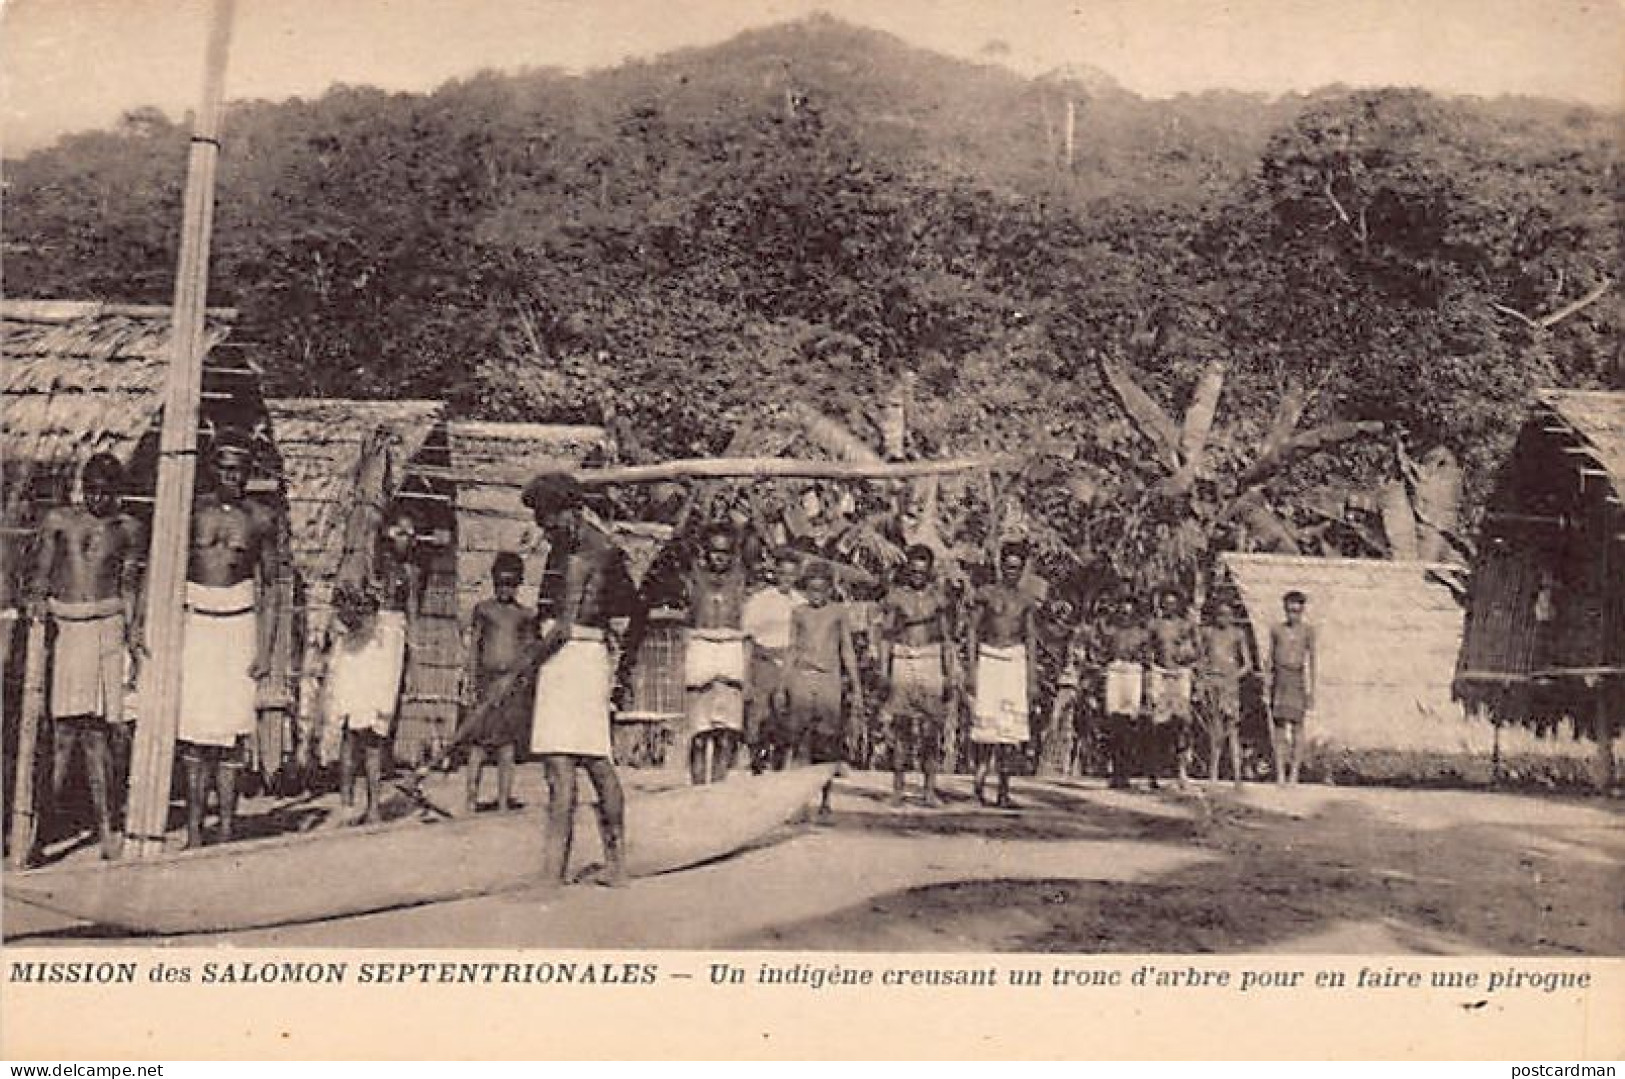 Papua New Guinea - A Native Digging A Tree Trunk To Make A Canoe - Publ. Mission Des Salomon Septentrionales  - Papua New Guinea